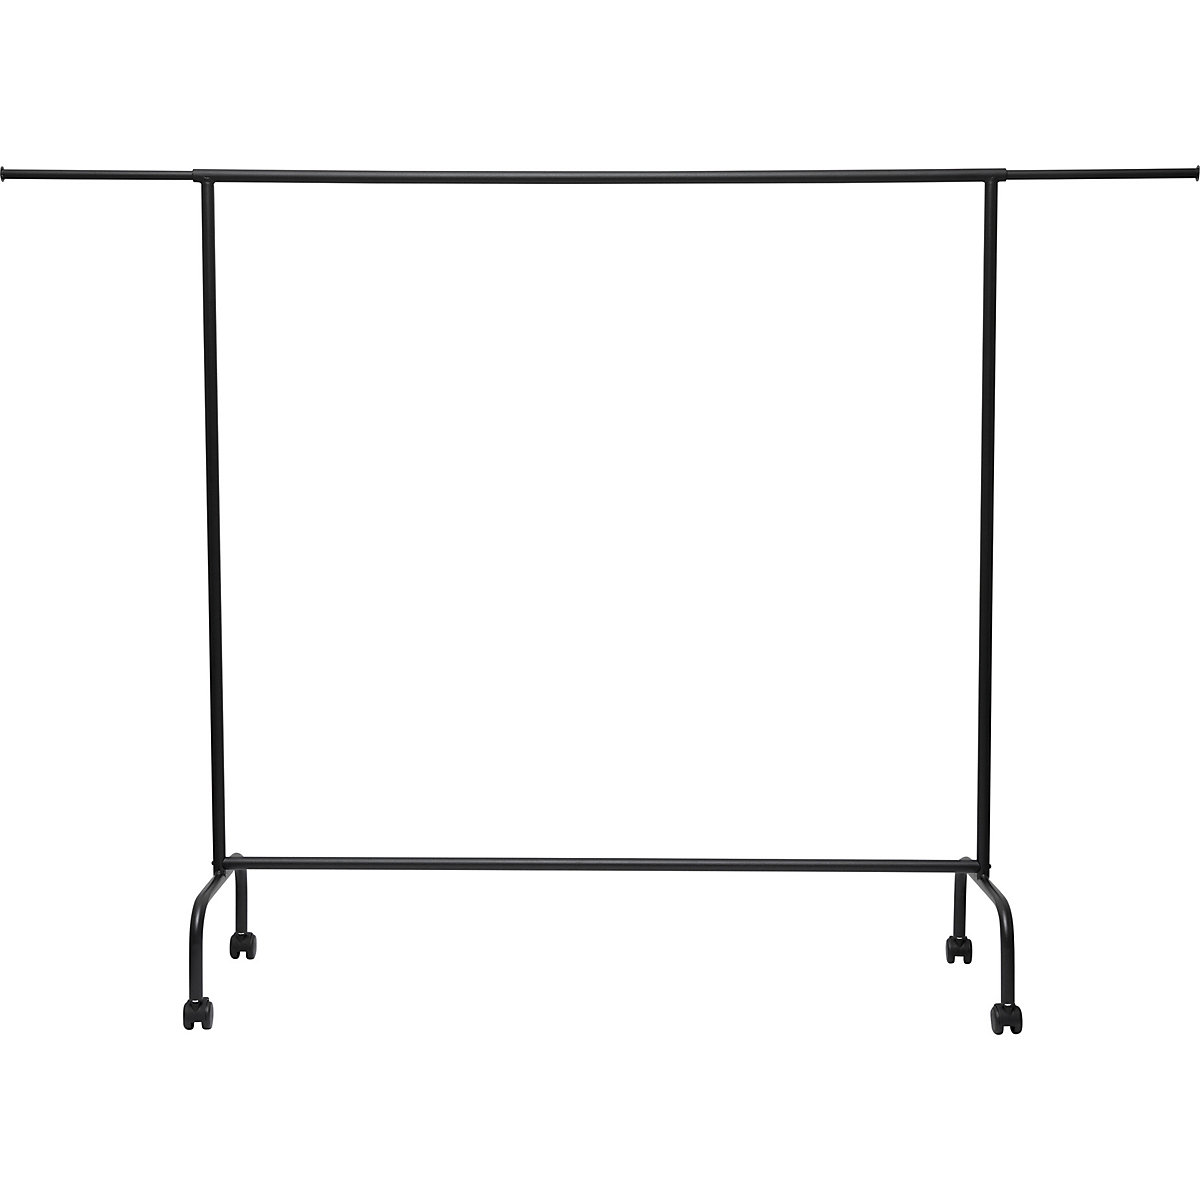 MAULlimbo coat stand – MAUL (Product illustration 6)-5